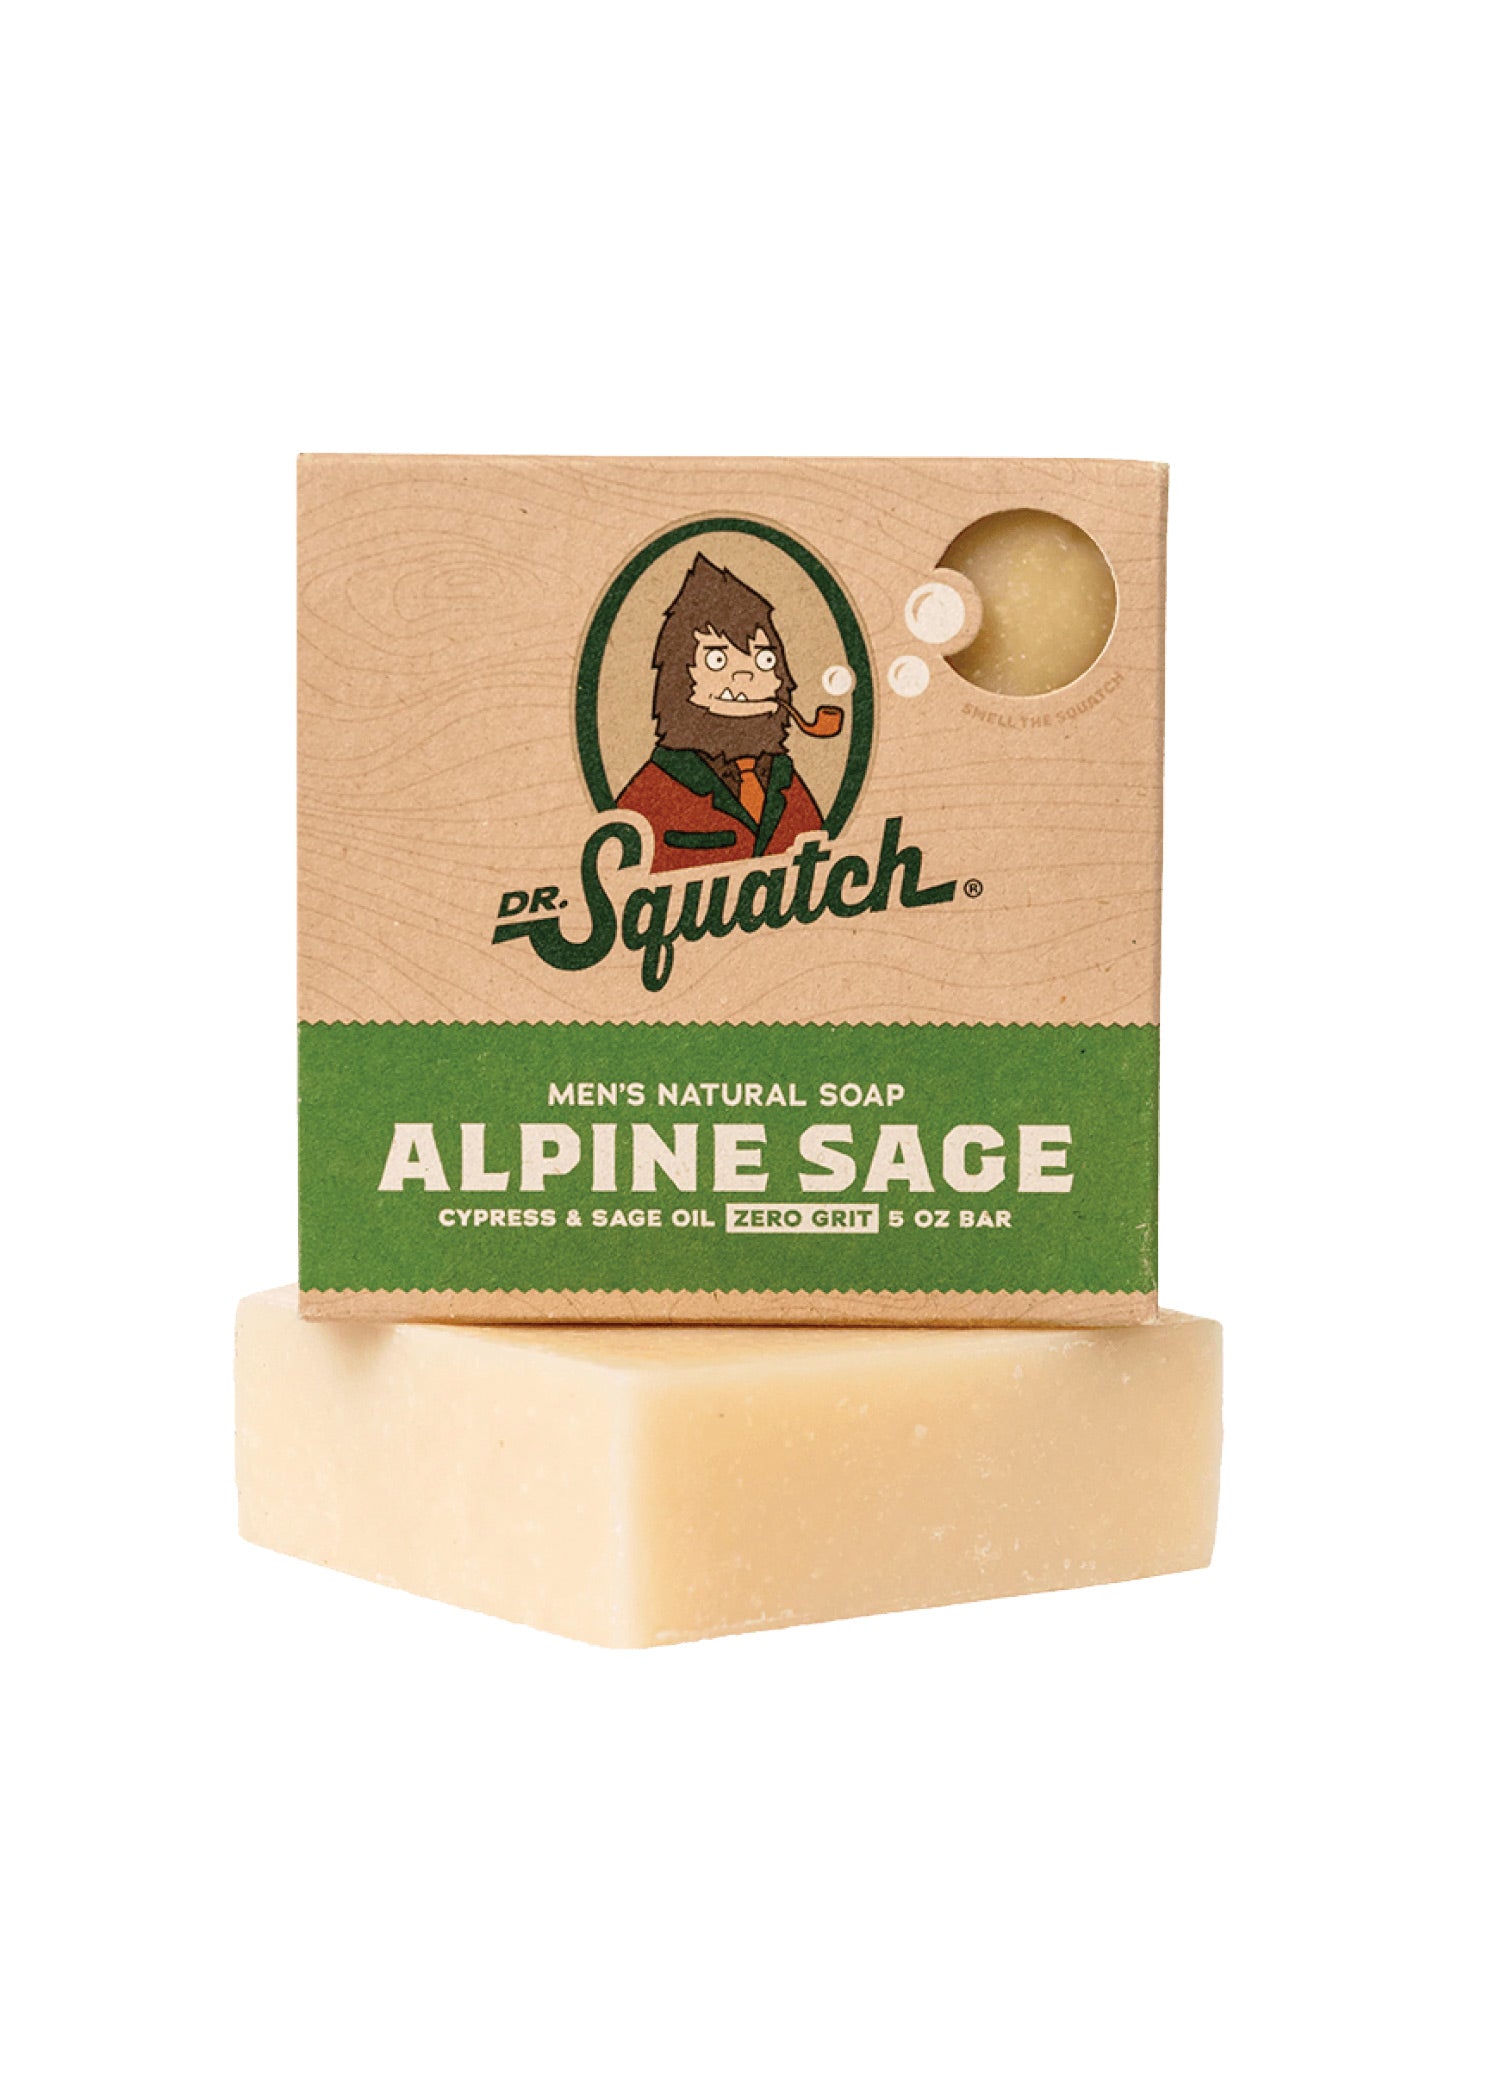 Dr. Squatch Alpine Sage Soap 5oz Zero Grit Free Shipping